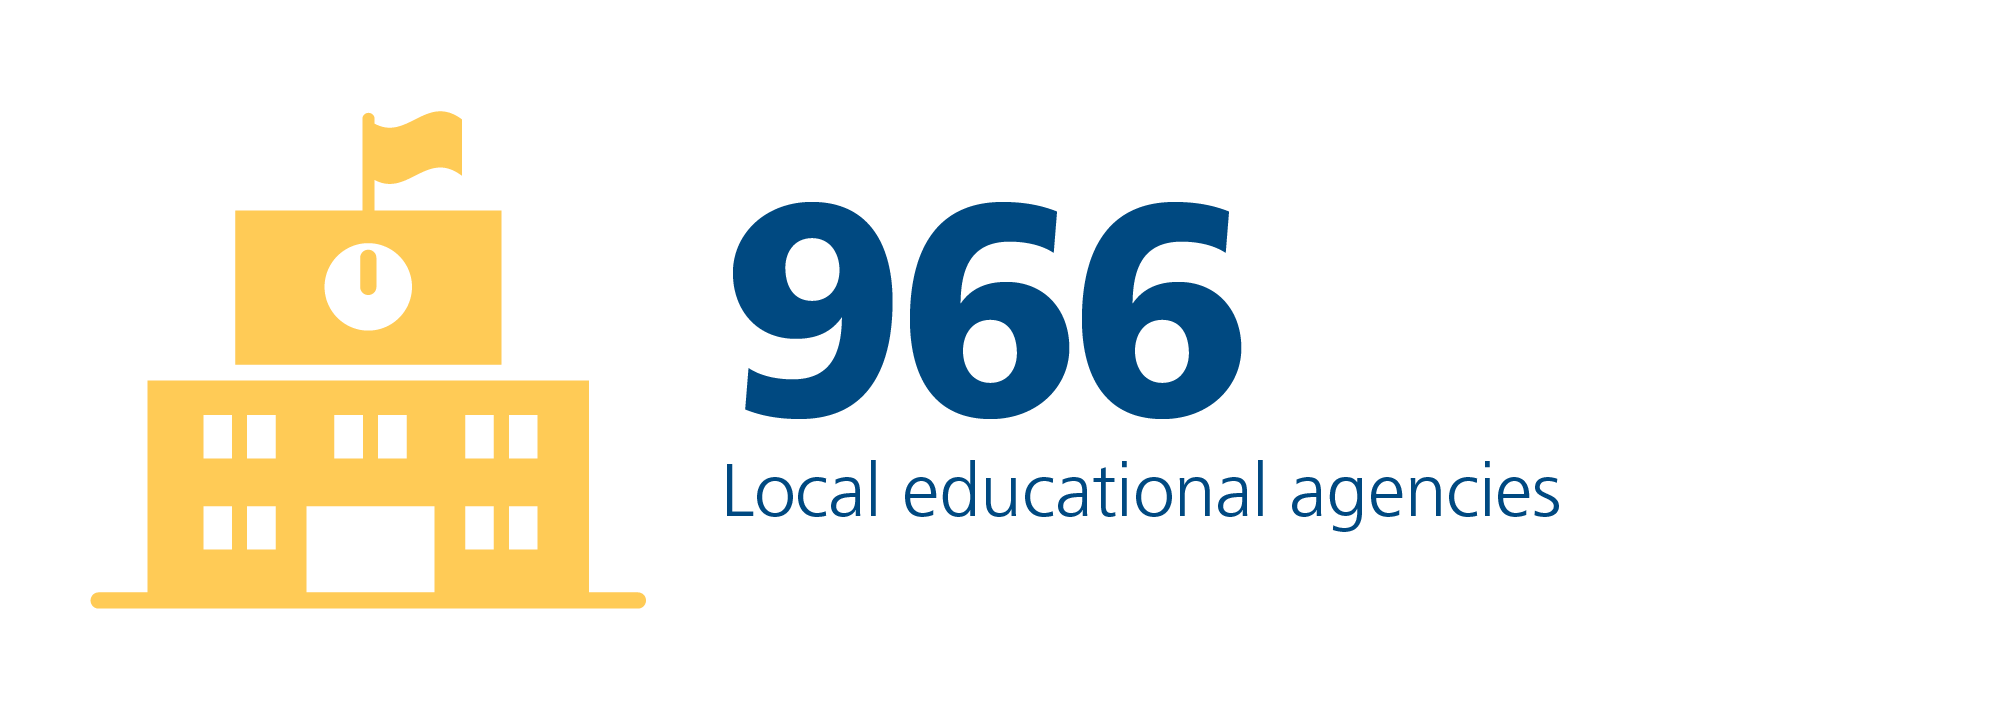 966 Local educational agencies